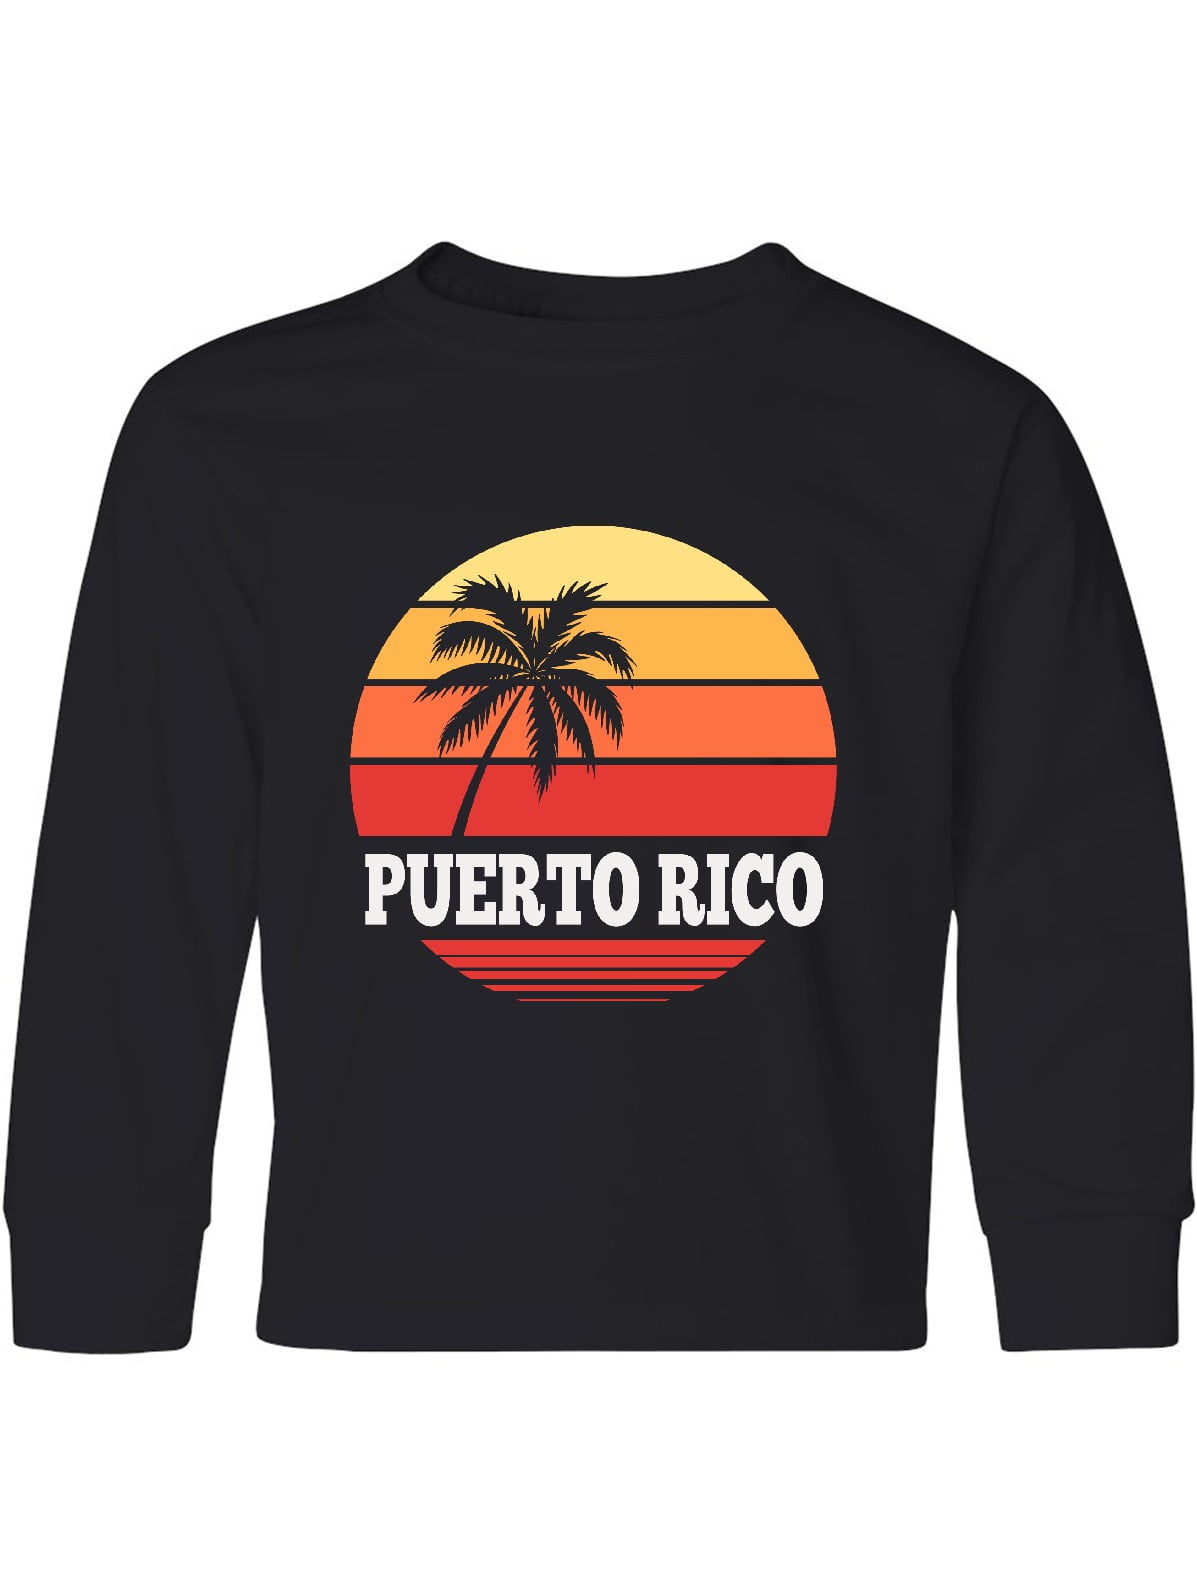 Puerto Rico Vacation Cruise Youth Long Sleeve T-Shirt - Walmart.com ...